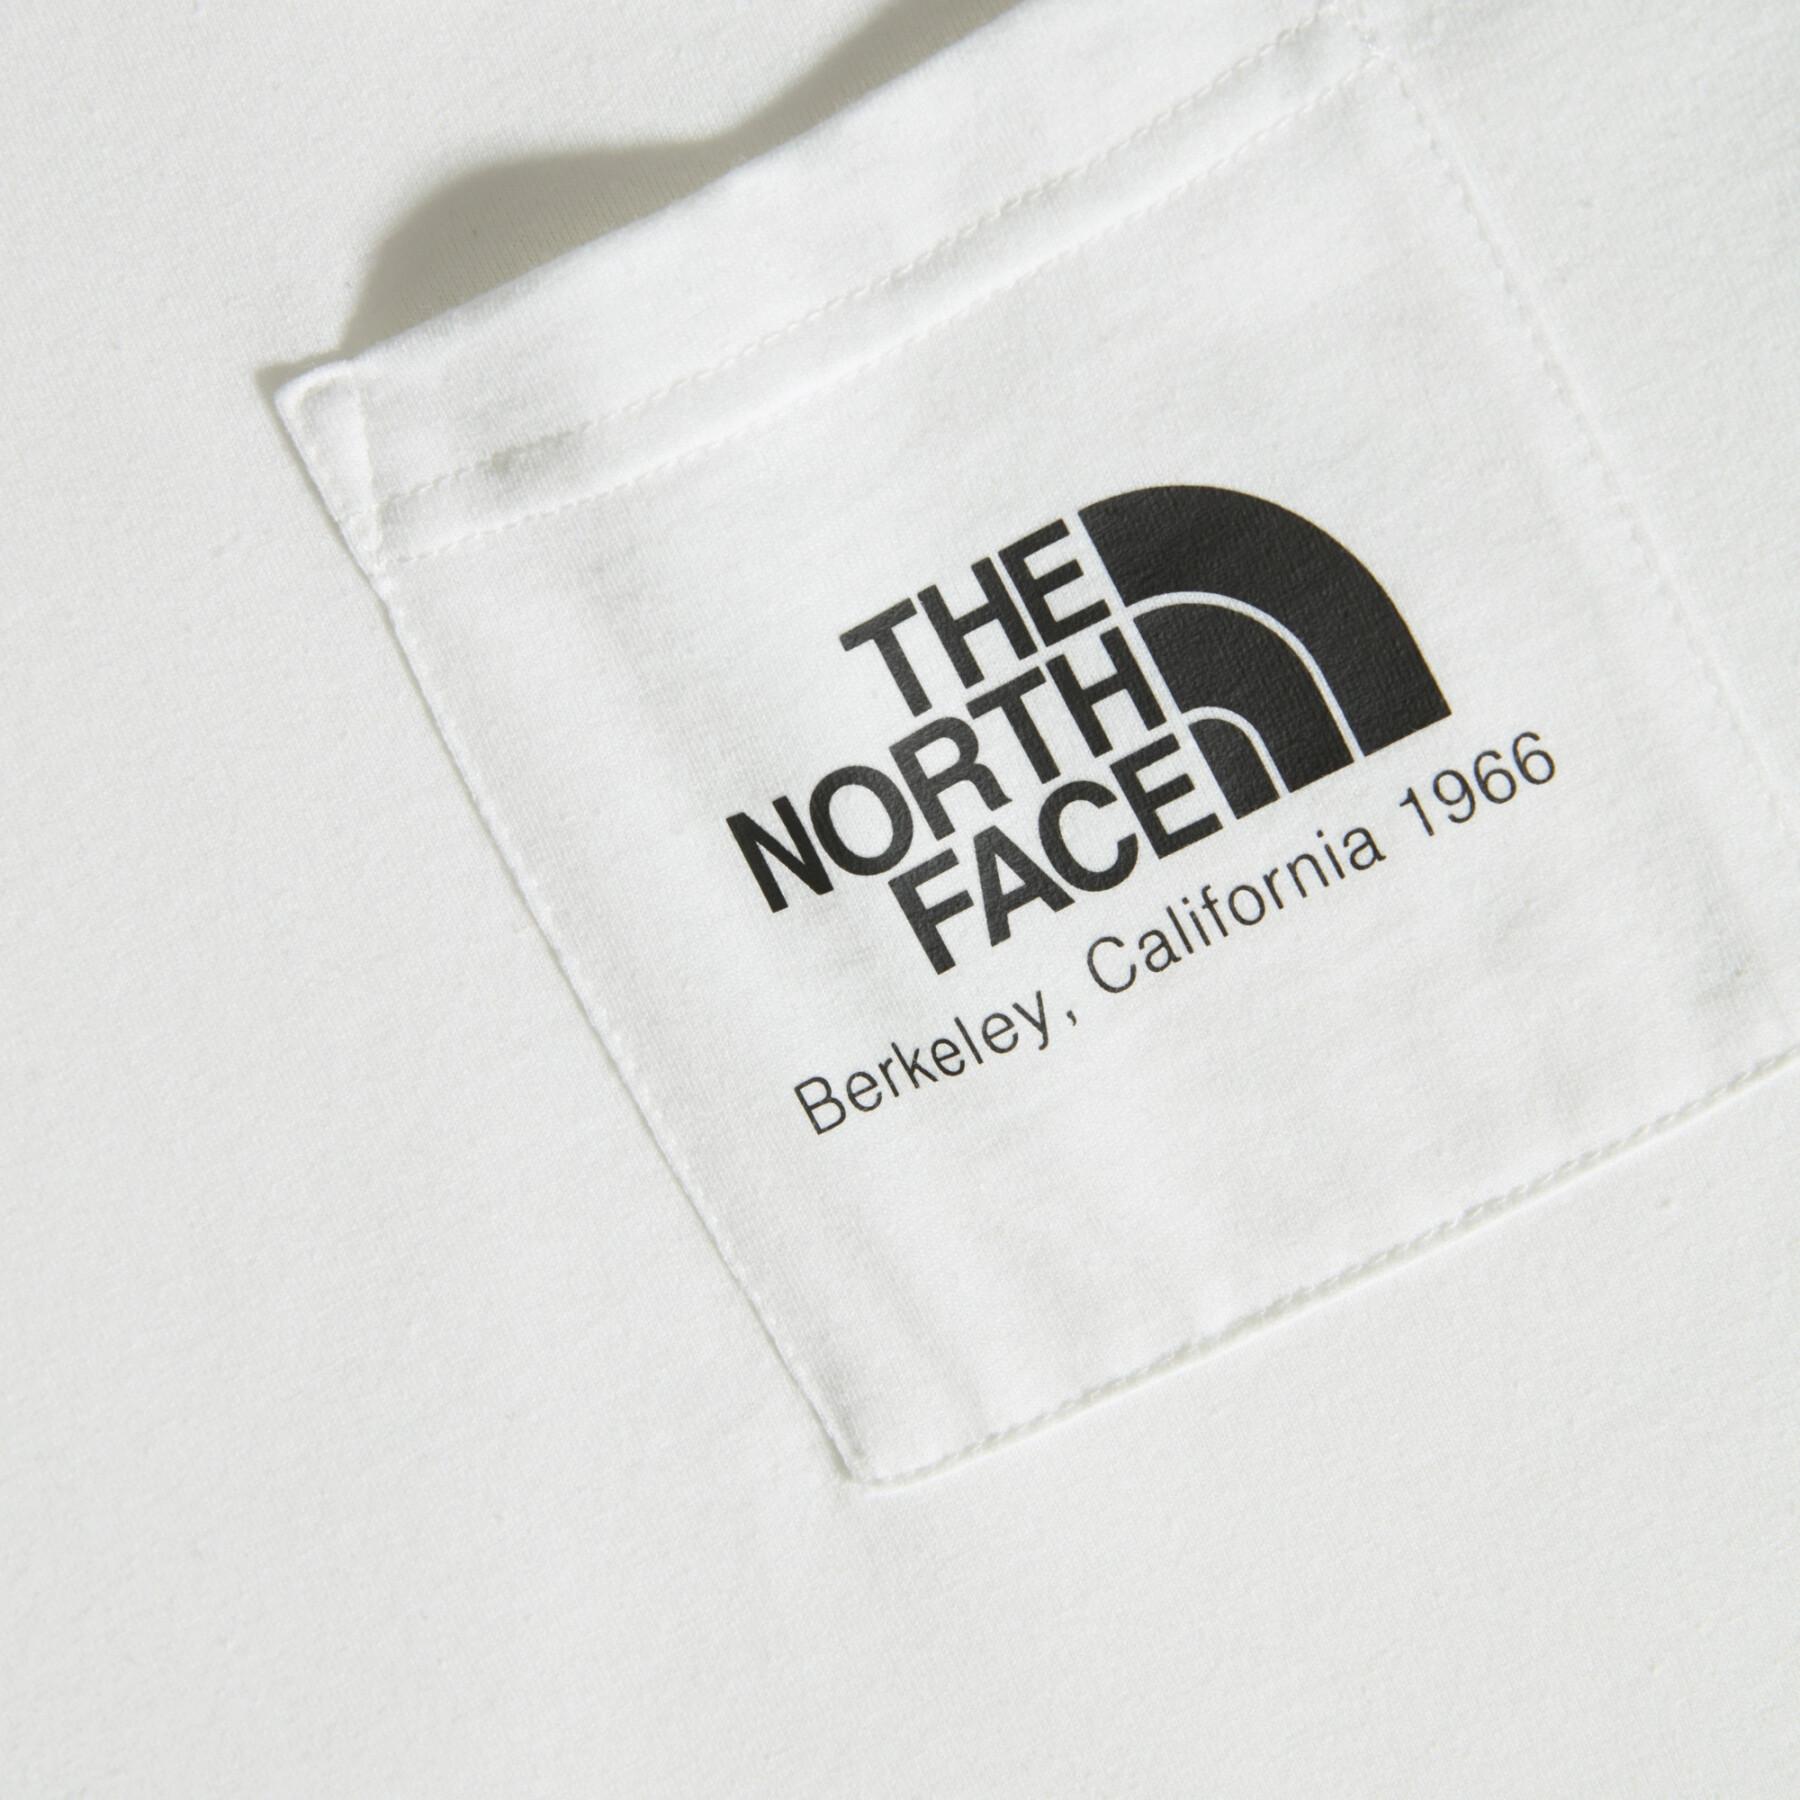 Camiseta The North Face Berkeley California Pocket